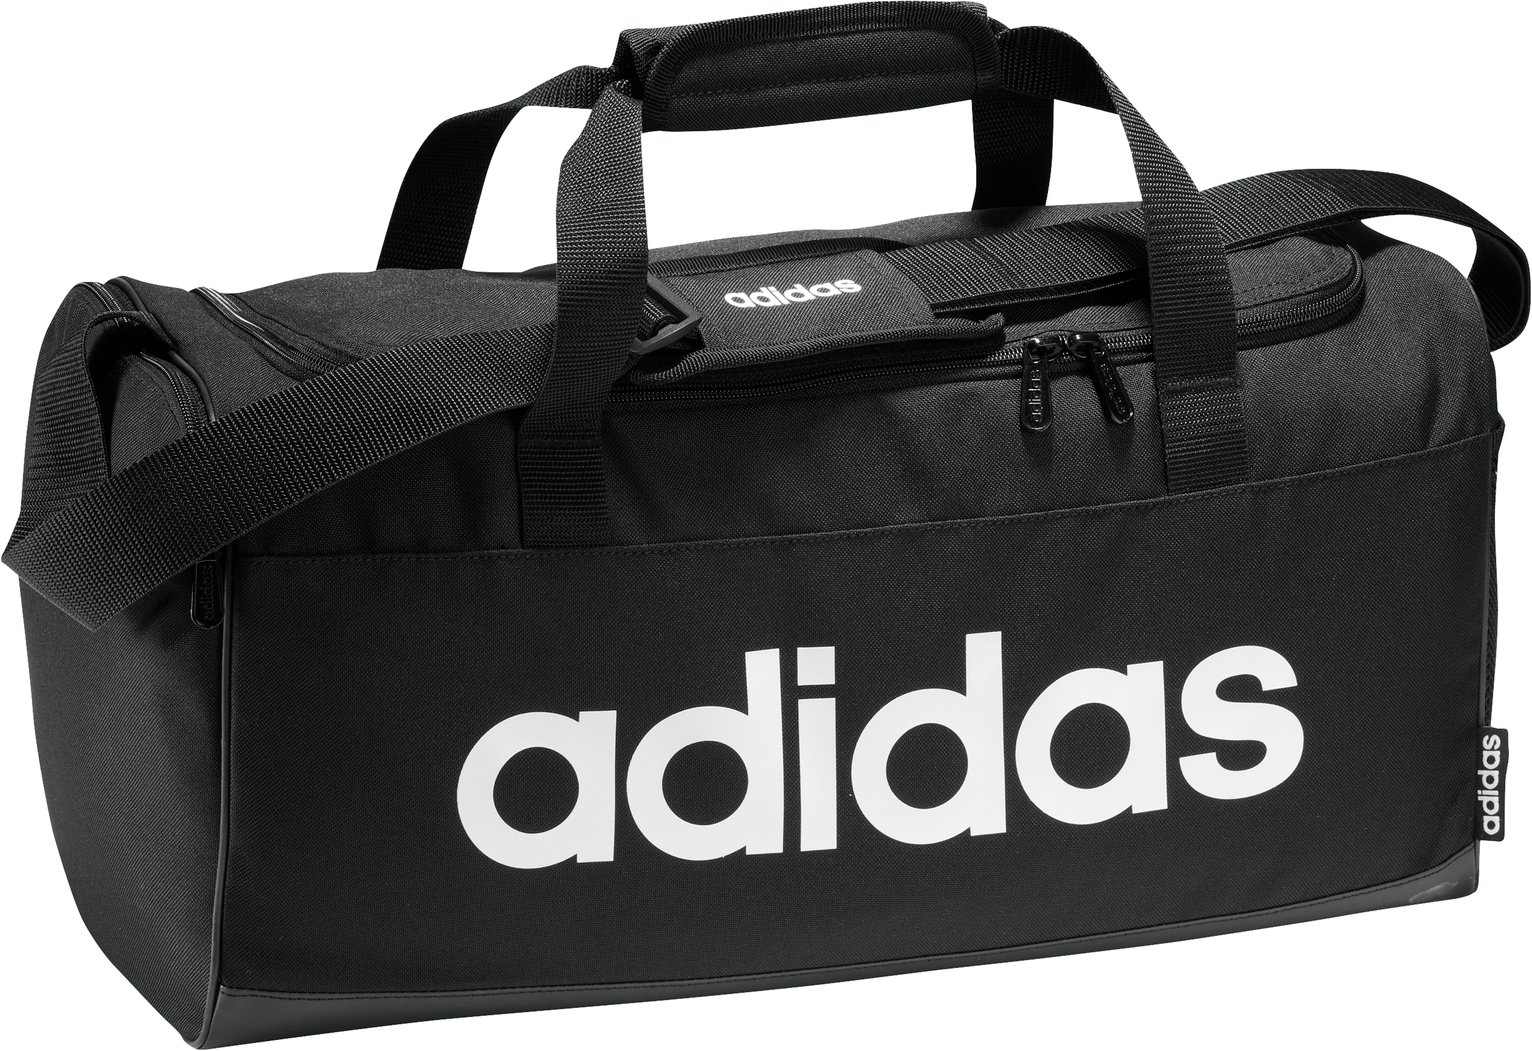 adidas linear travel bag